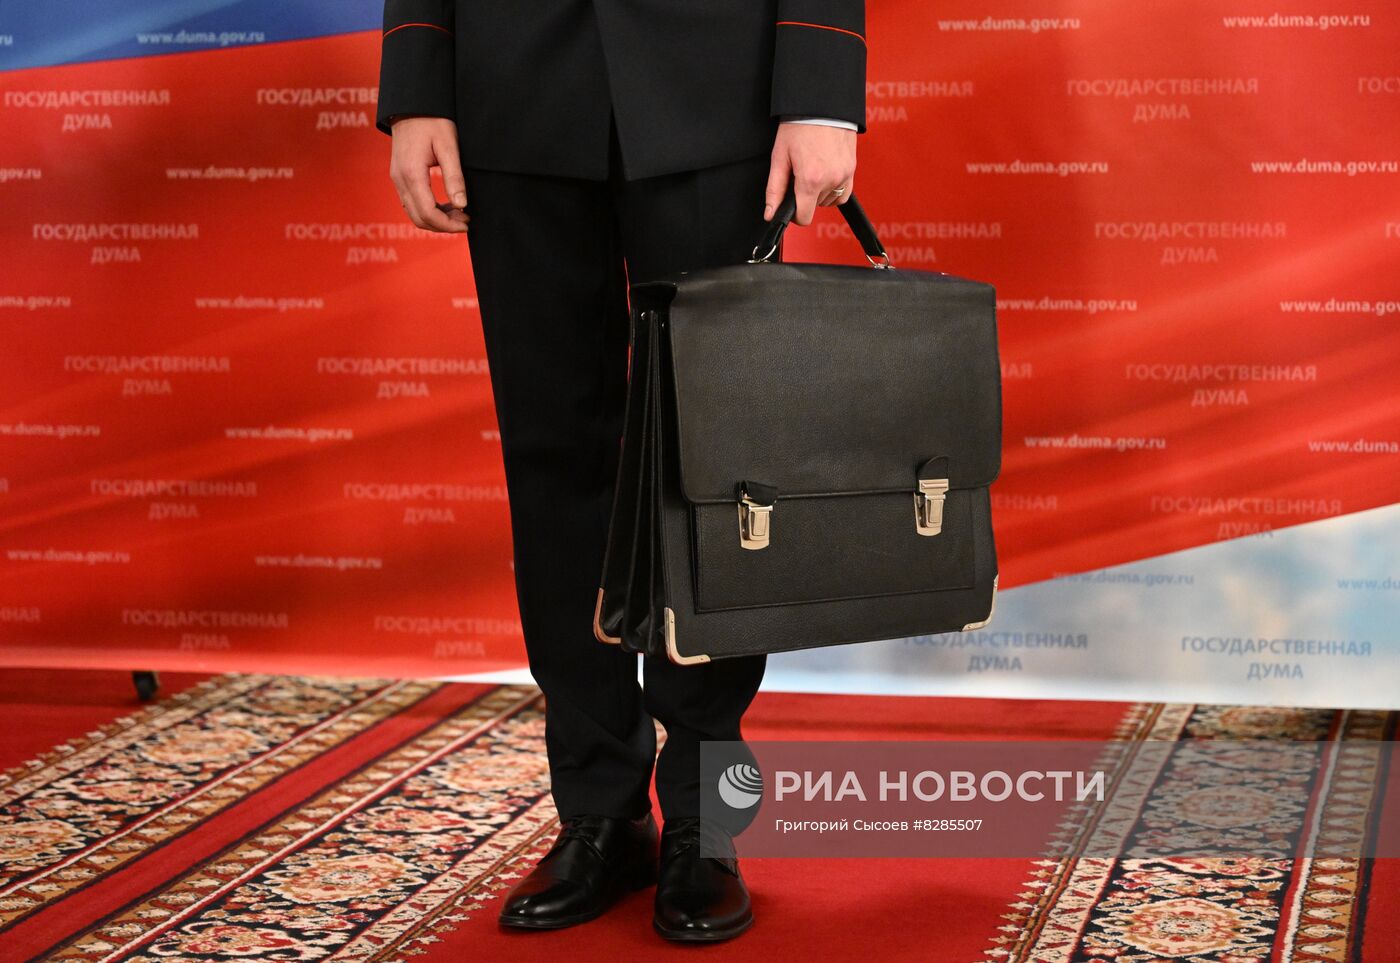 Внесение в Госдуму РФ проекта бюджета на 2023-2025 годы